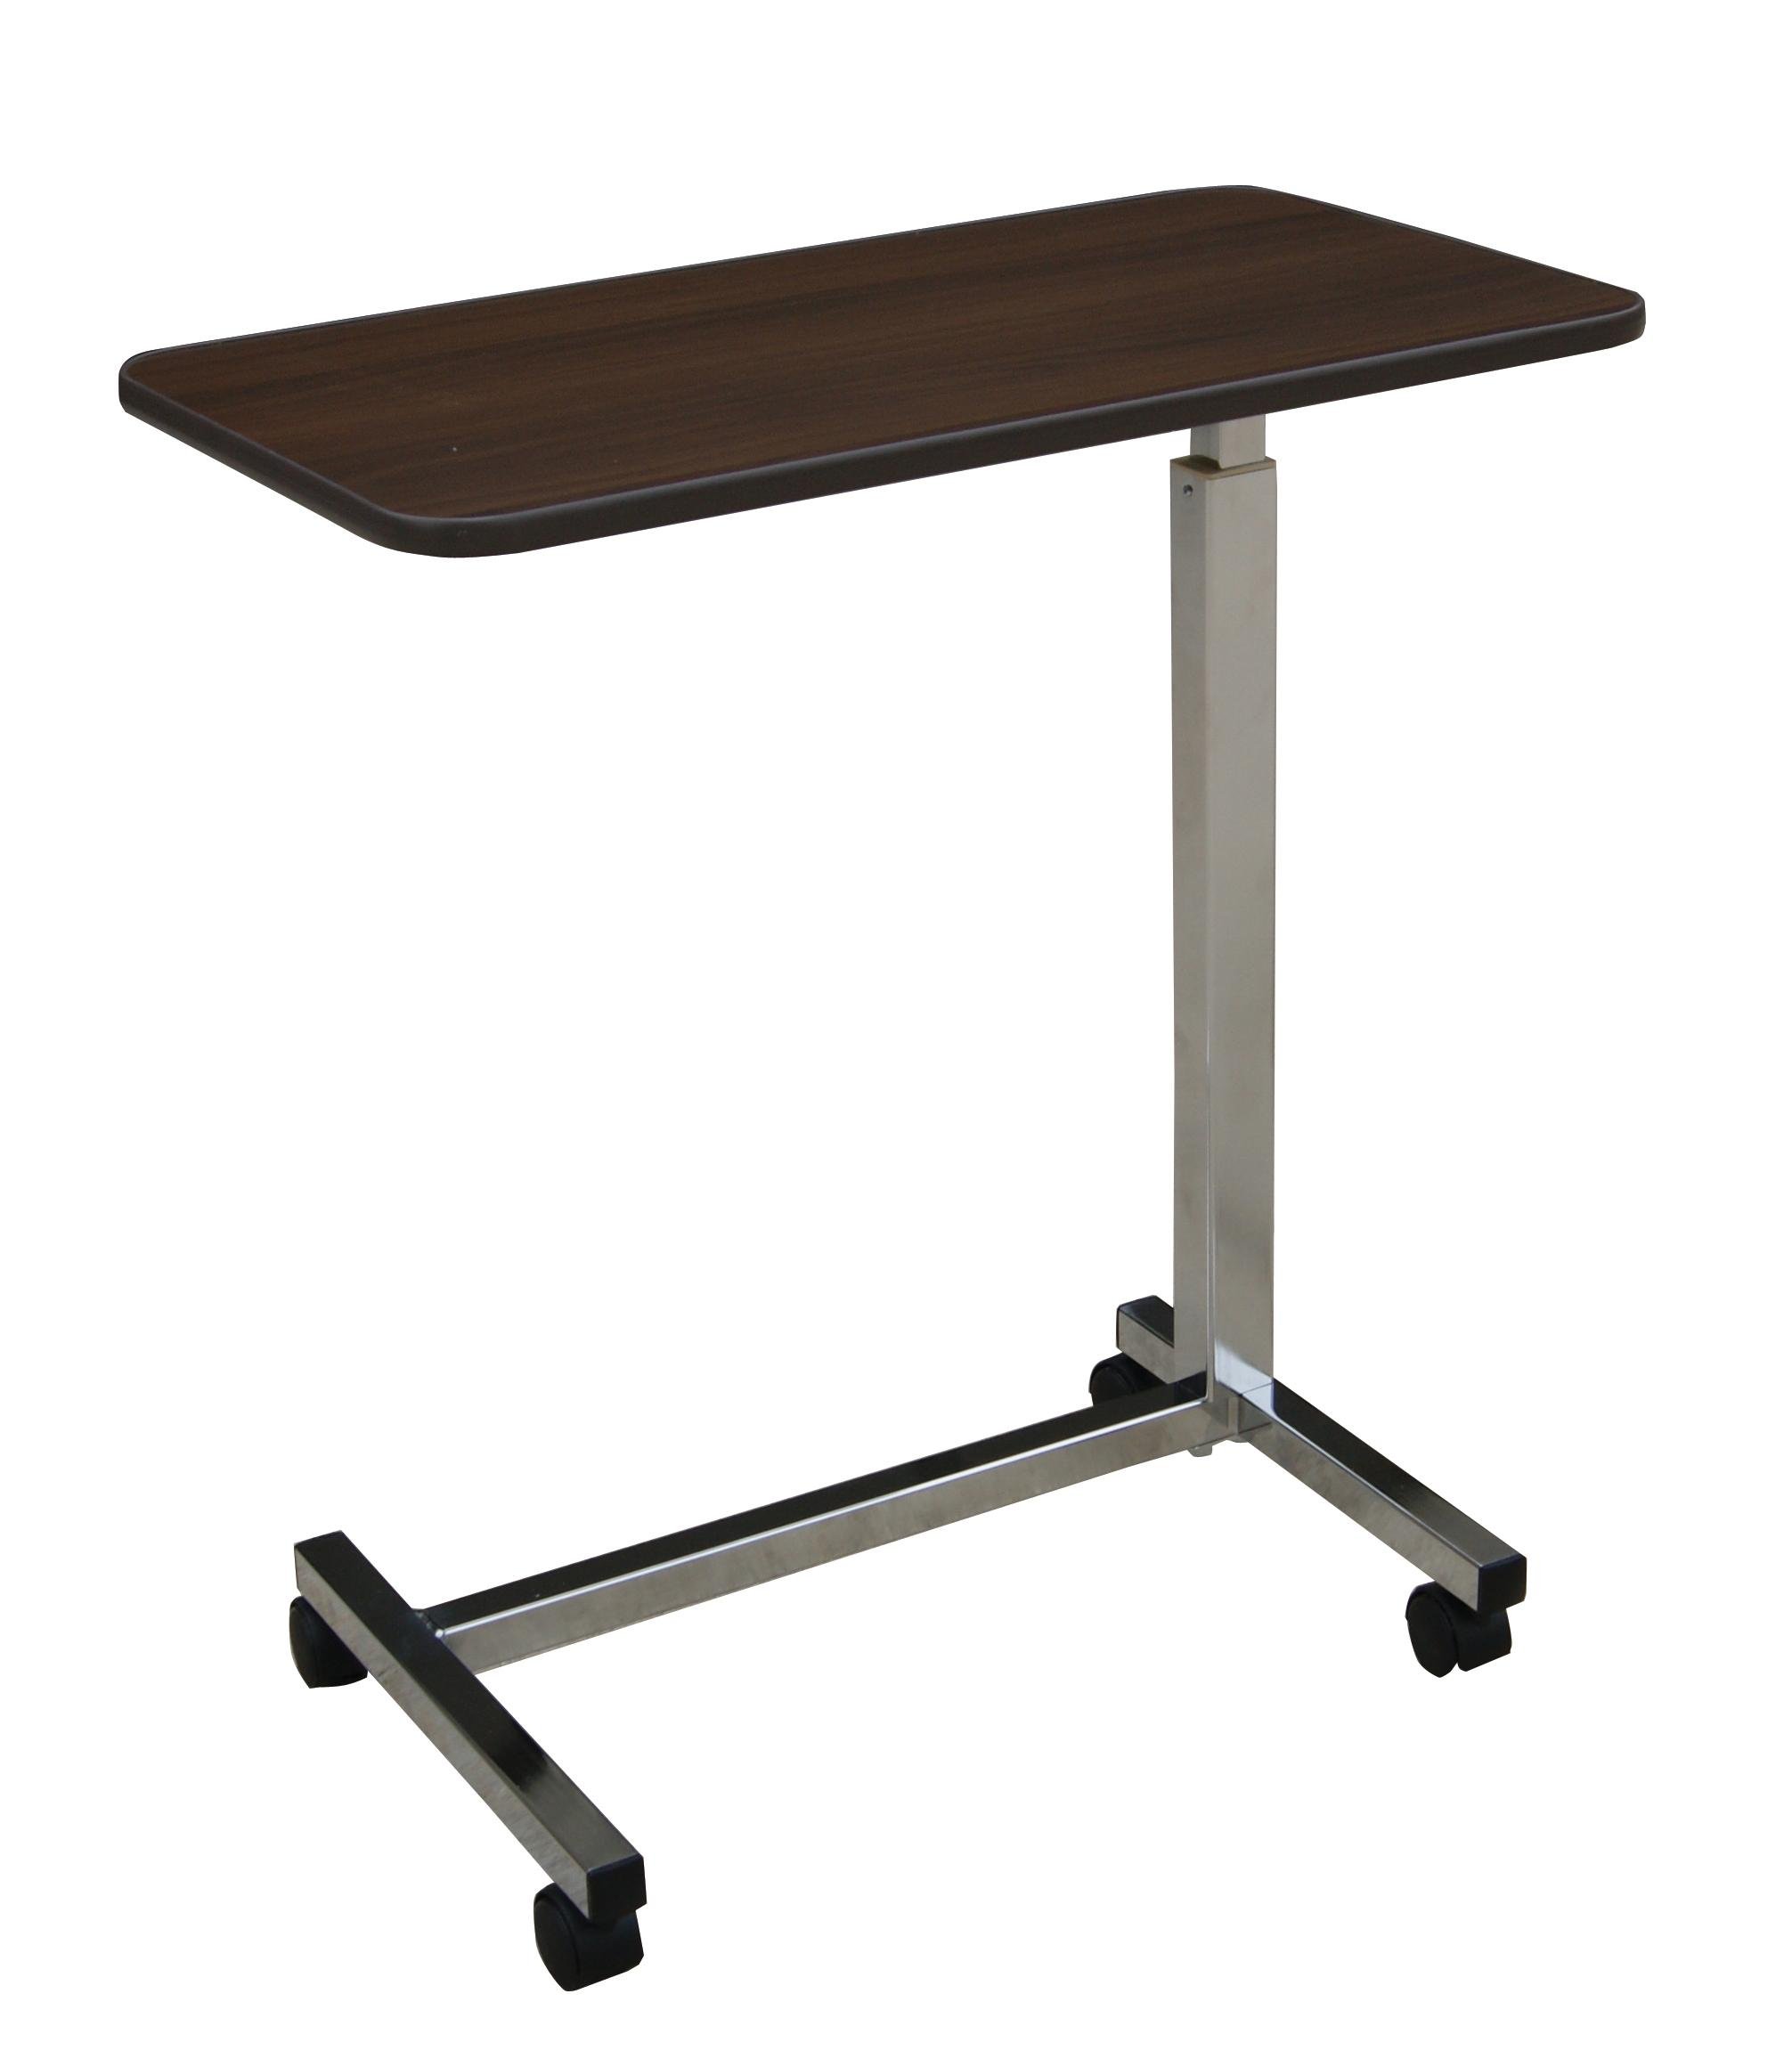 Medline Economy Overbed Table with Wheels - Versatile Use for Home, Nursing Home, Assisted Living or Hospital - Walnut Top, Silver Hammertone Base - Adjustable & Portable